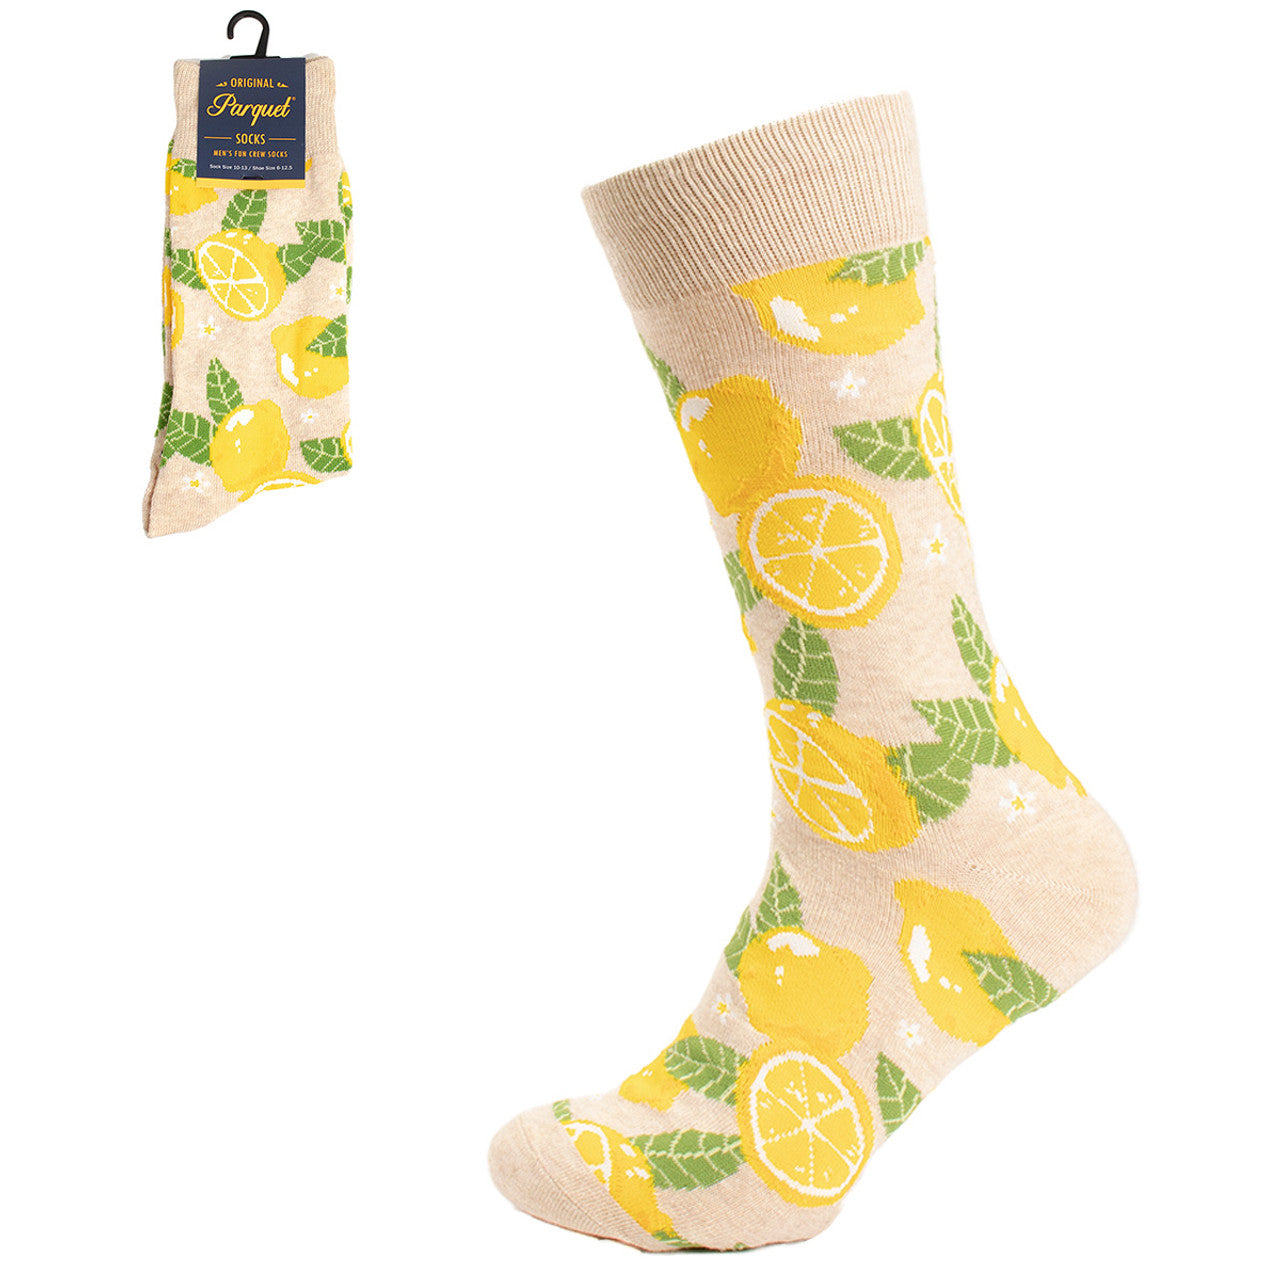 Funny Socks Men's Lemon Tree Novelty Socks Funny Socks Dad Gifts Cool Socks Funny Groomsmen